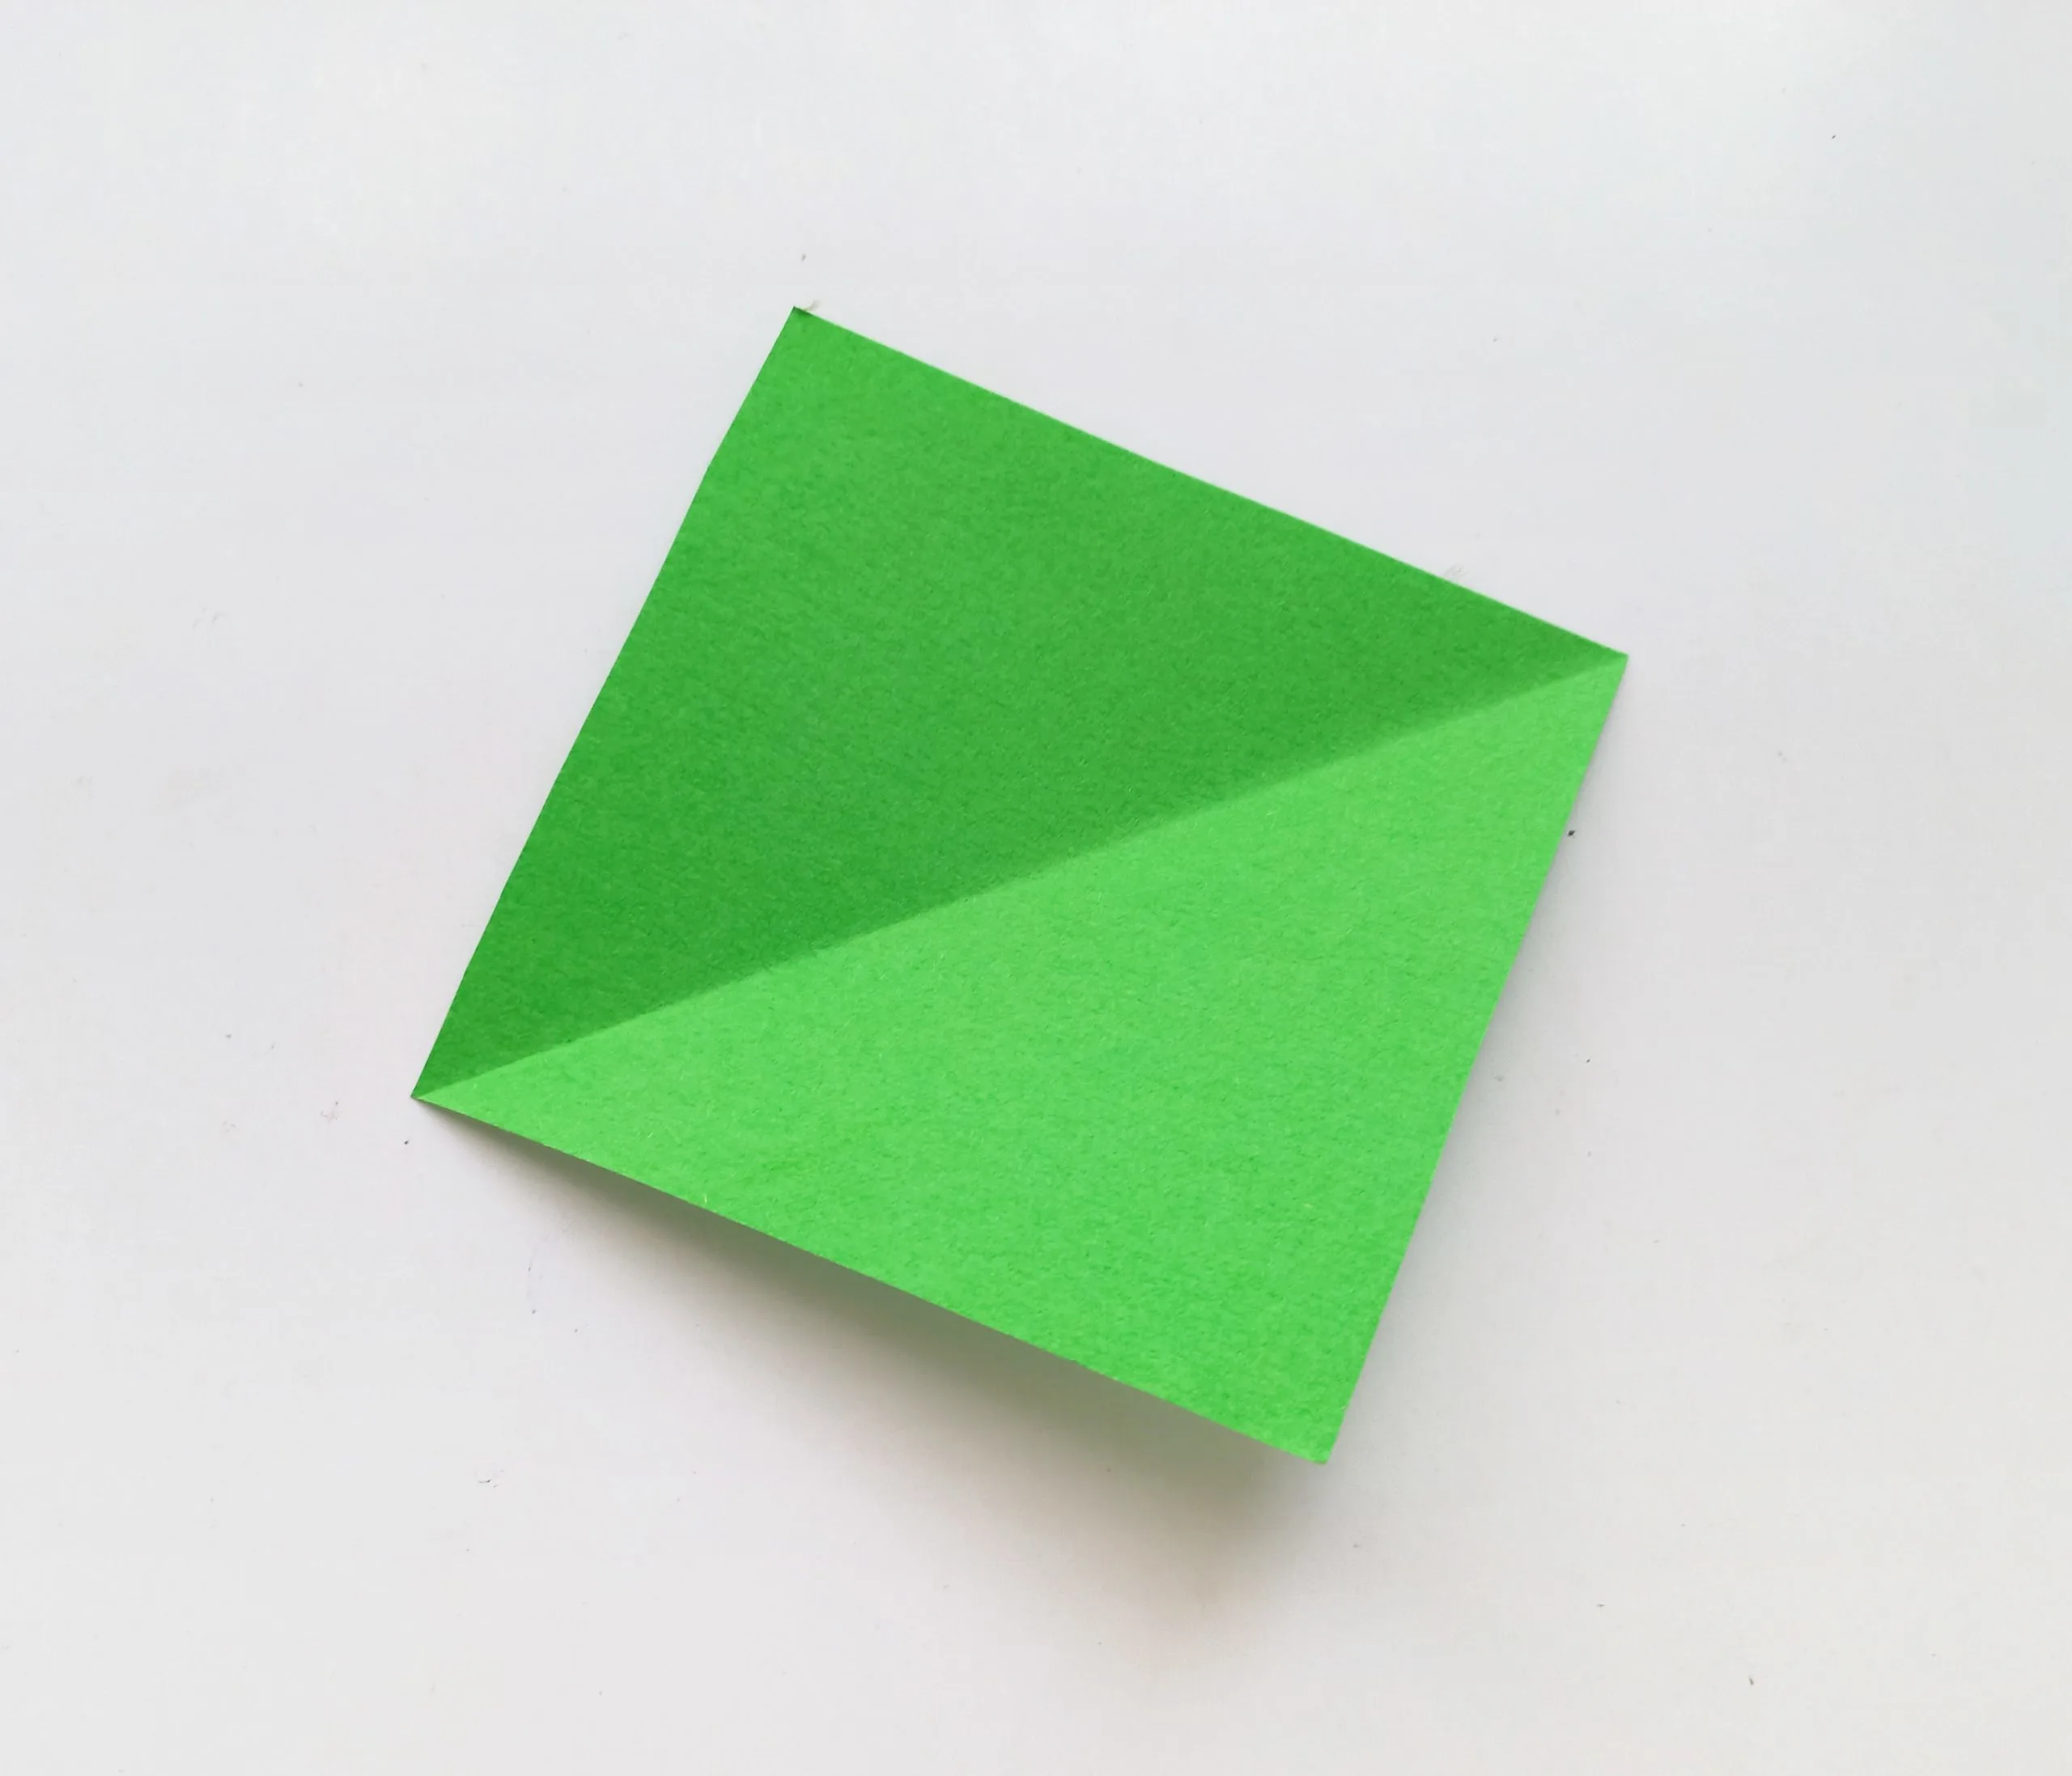 how to make flower stem origami